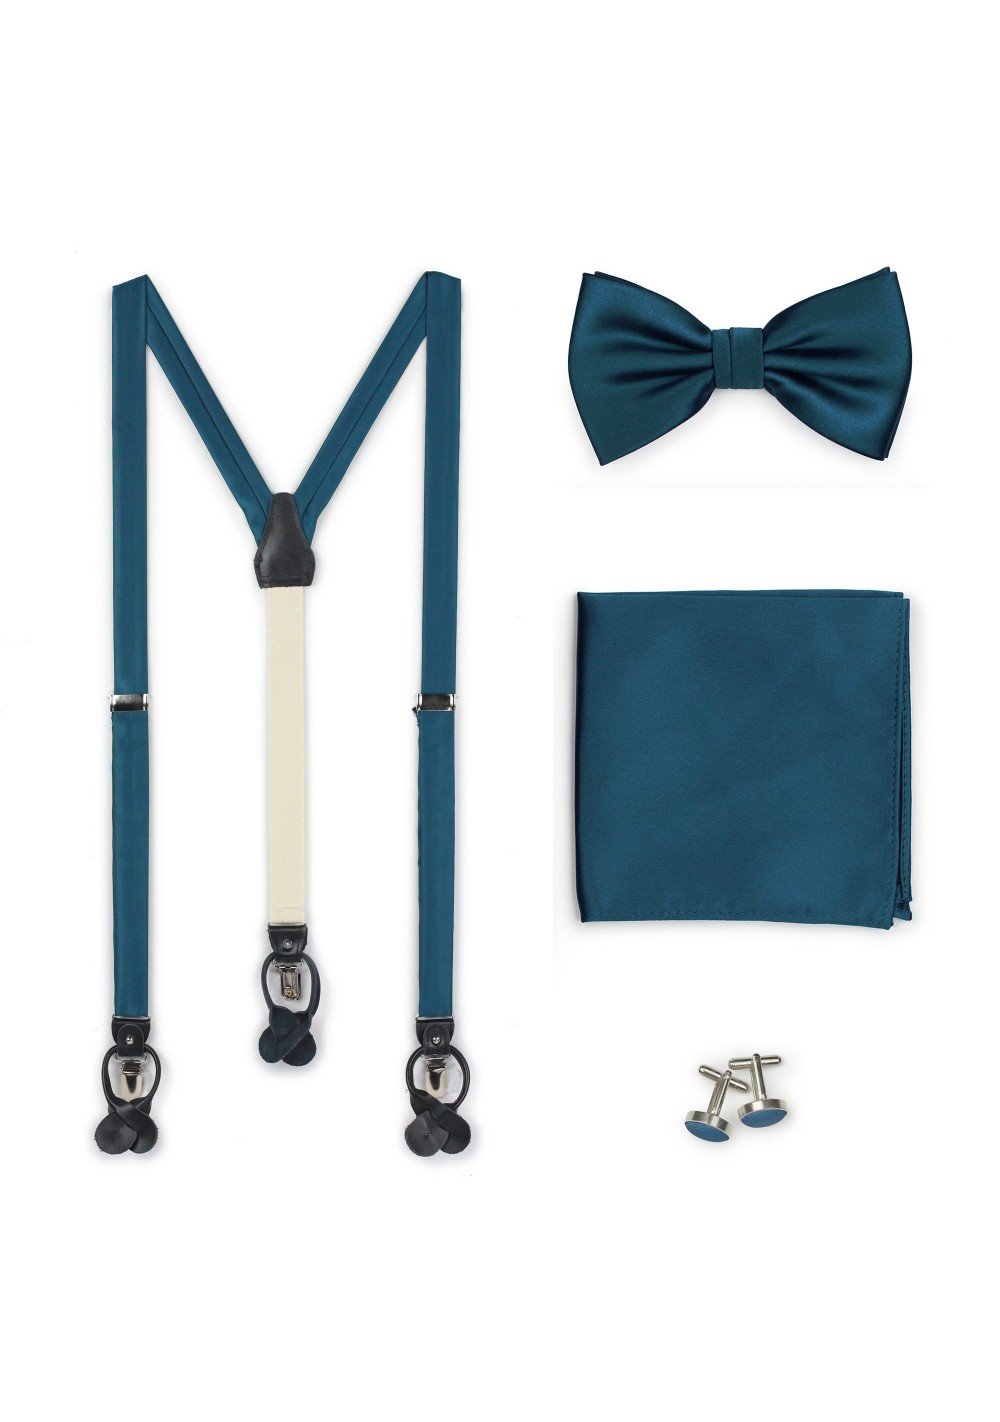 Suspender Bow Tie Gift Set in Teal Blue